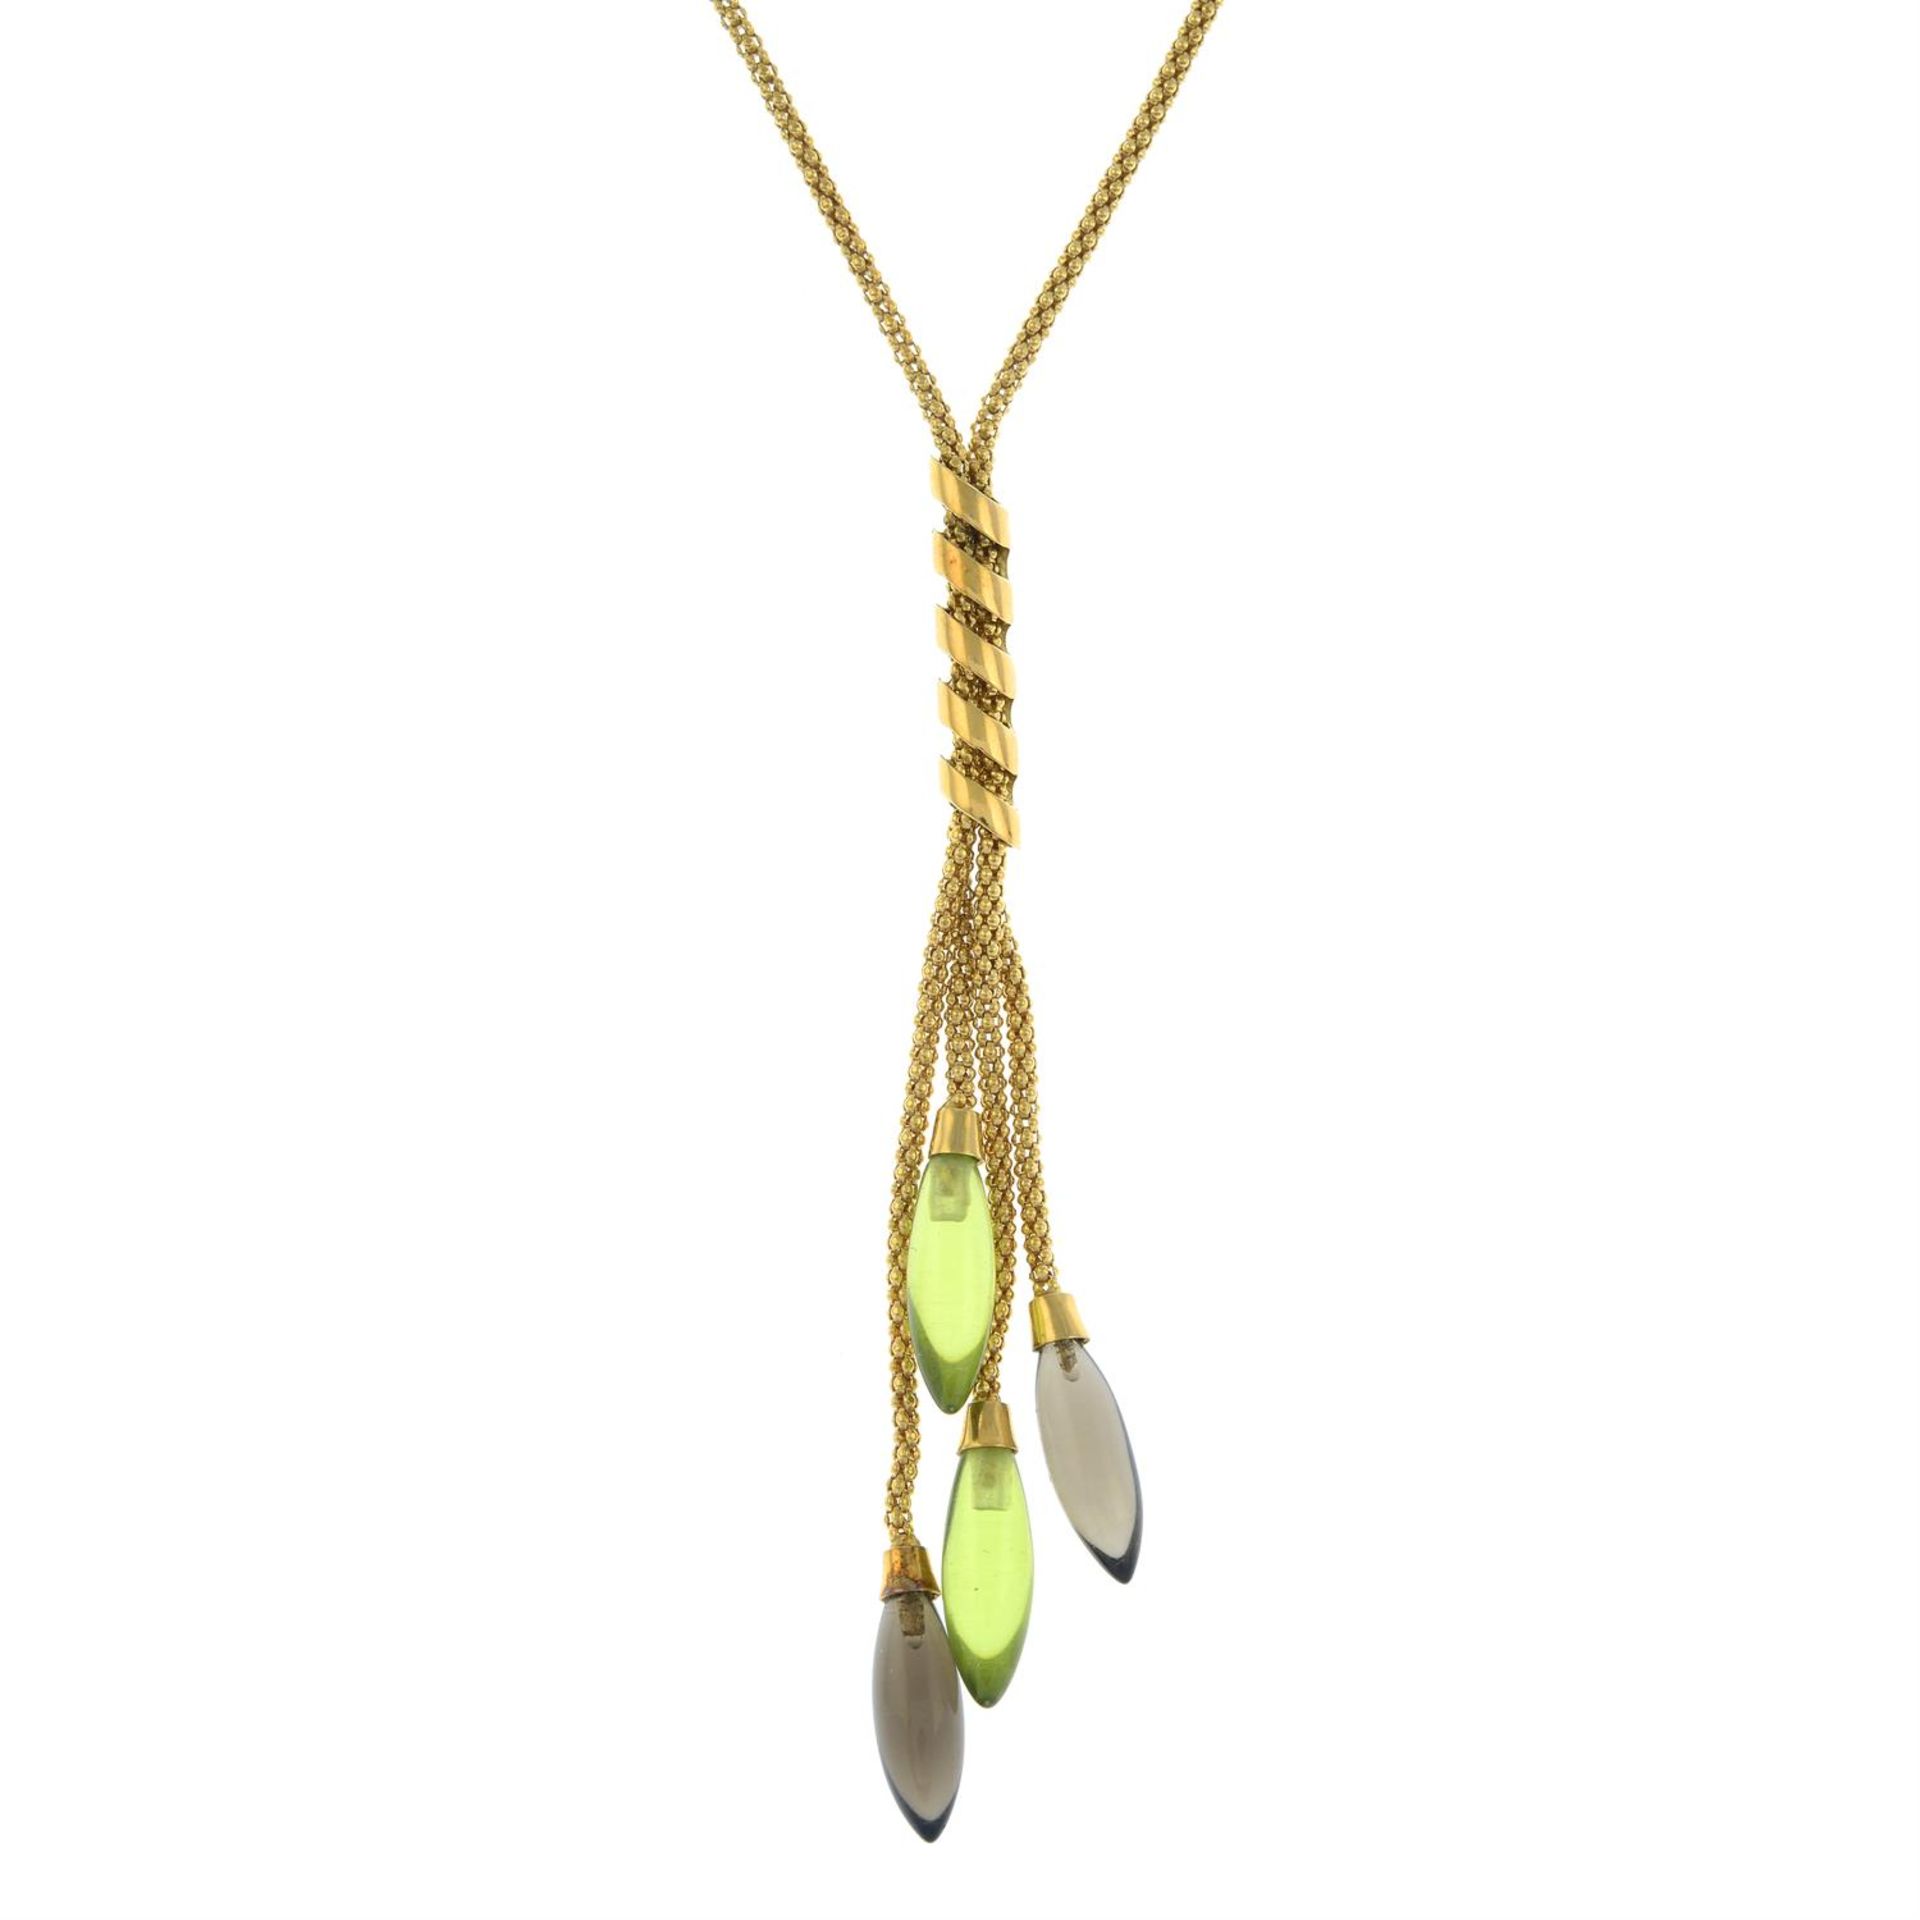 A peridot and smoky quartz drop necklace.